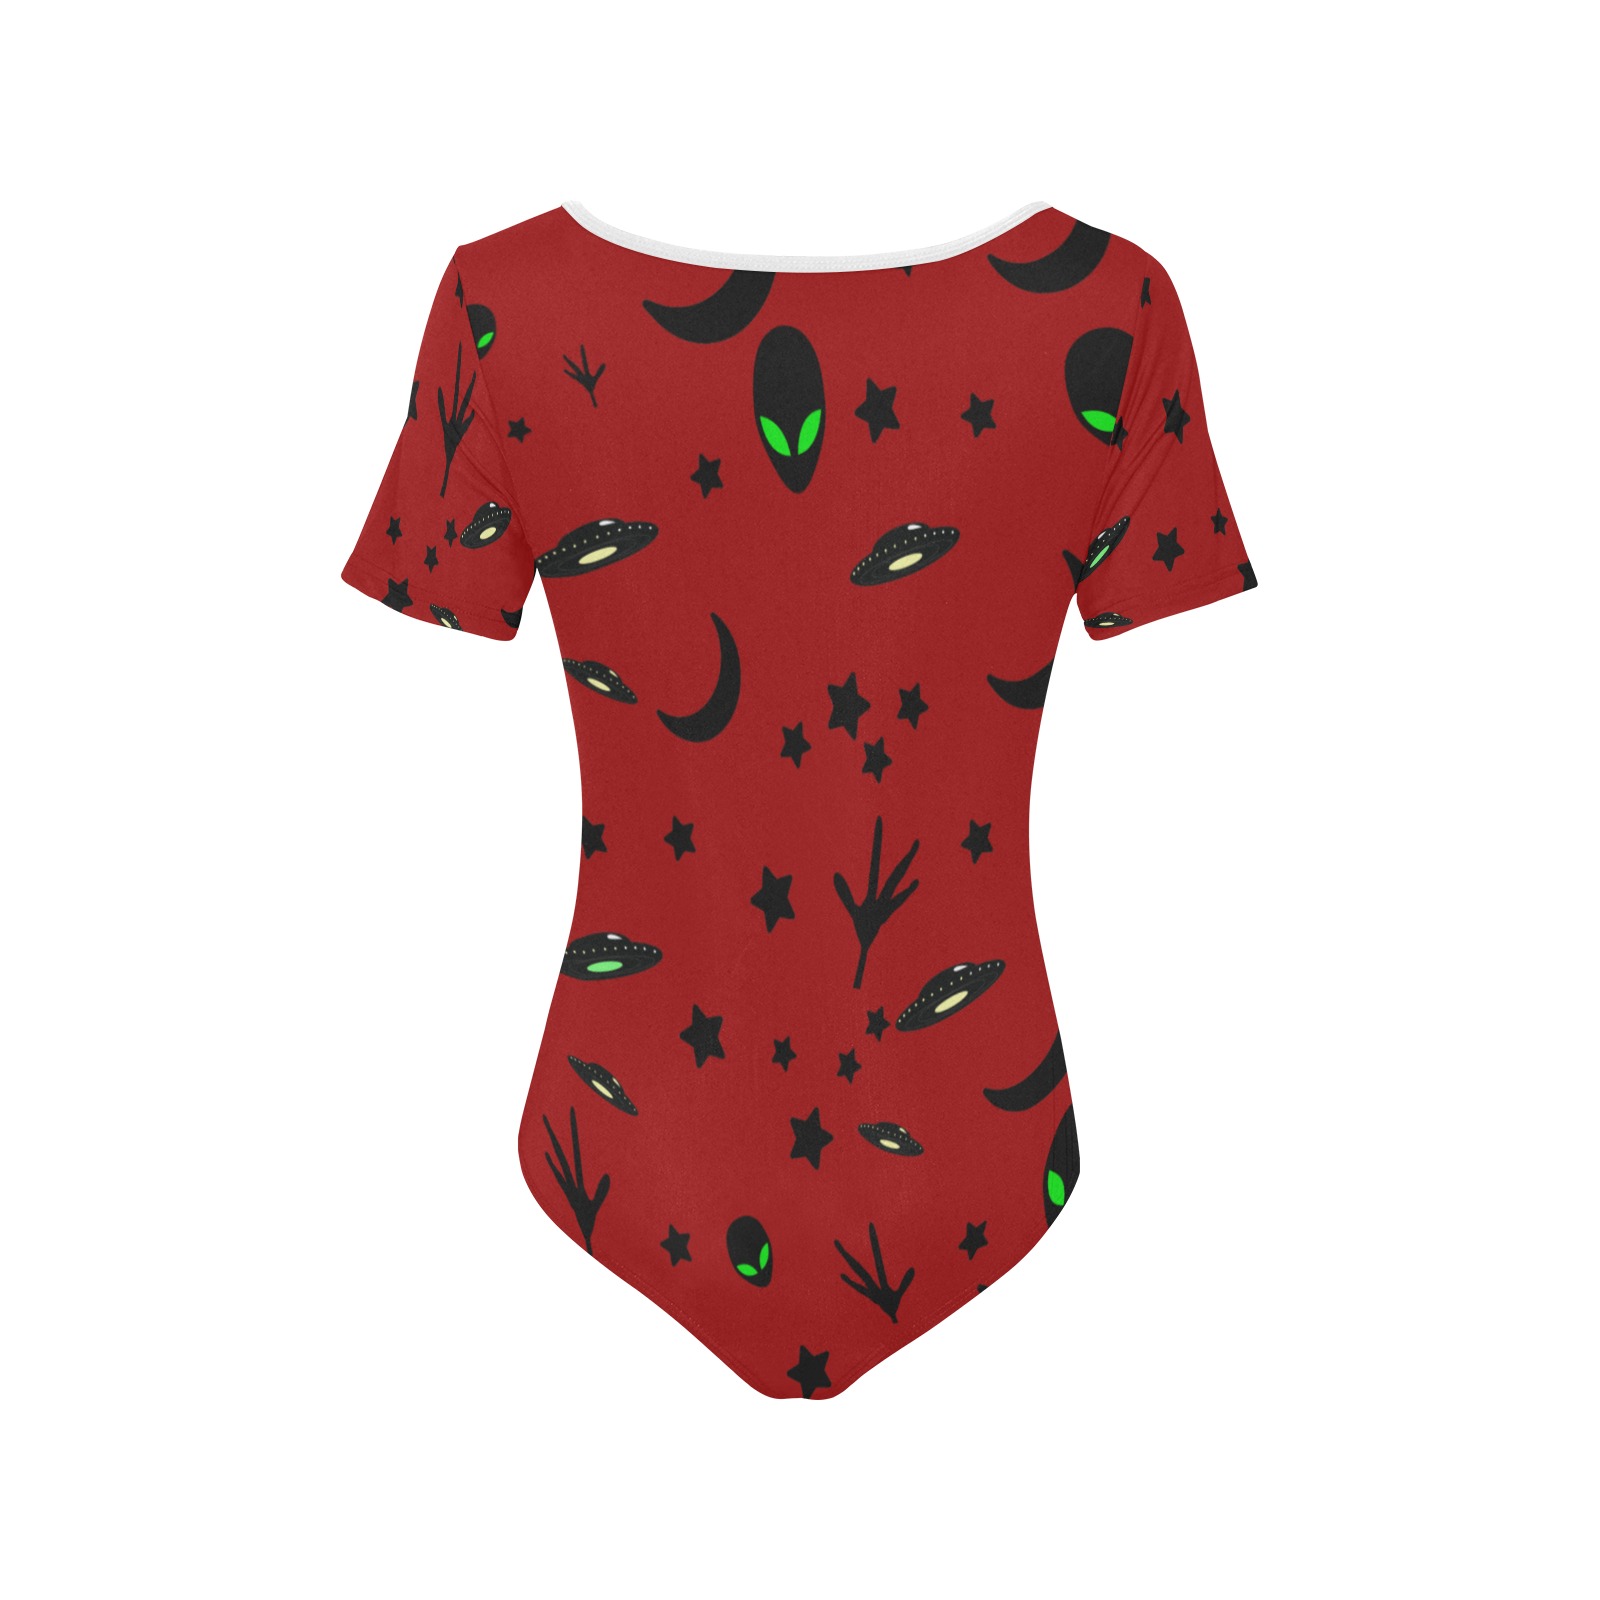 Aliens and Spaceships - Red Women's Short Sleeve Bodysuit